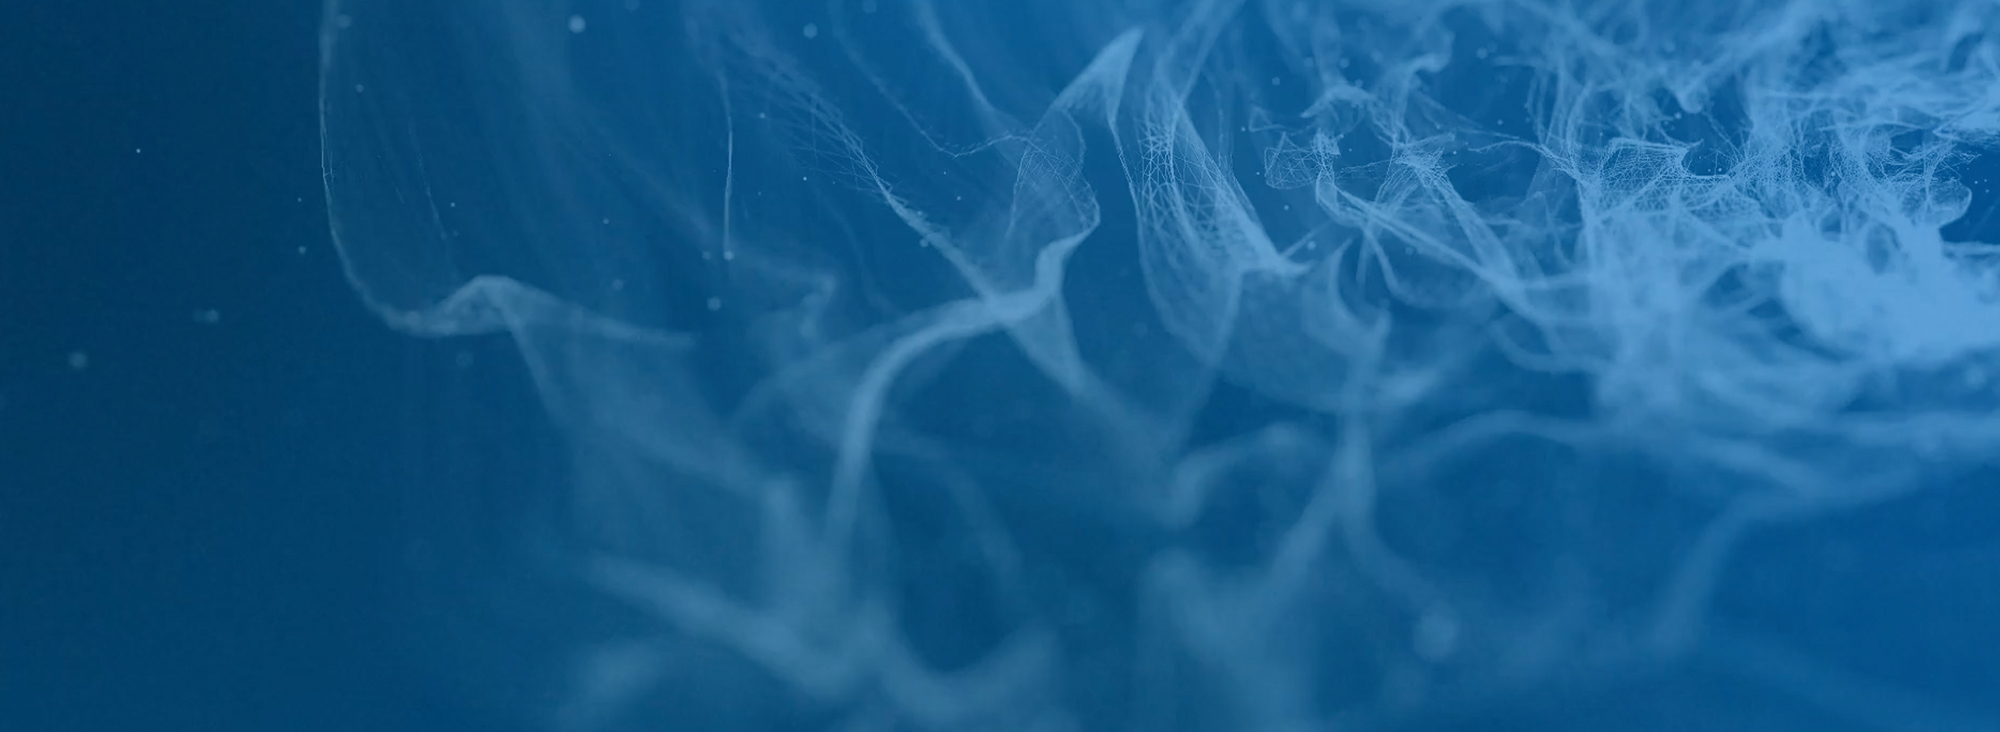 transparent white smoke over blue background